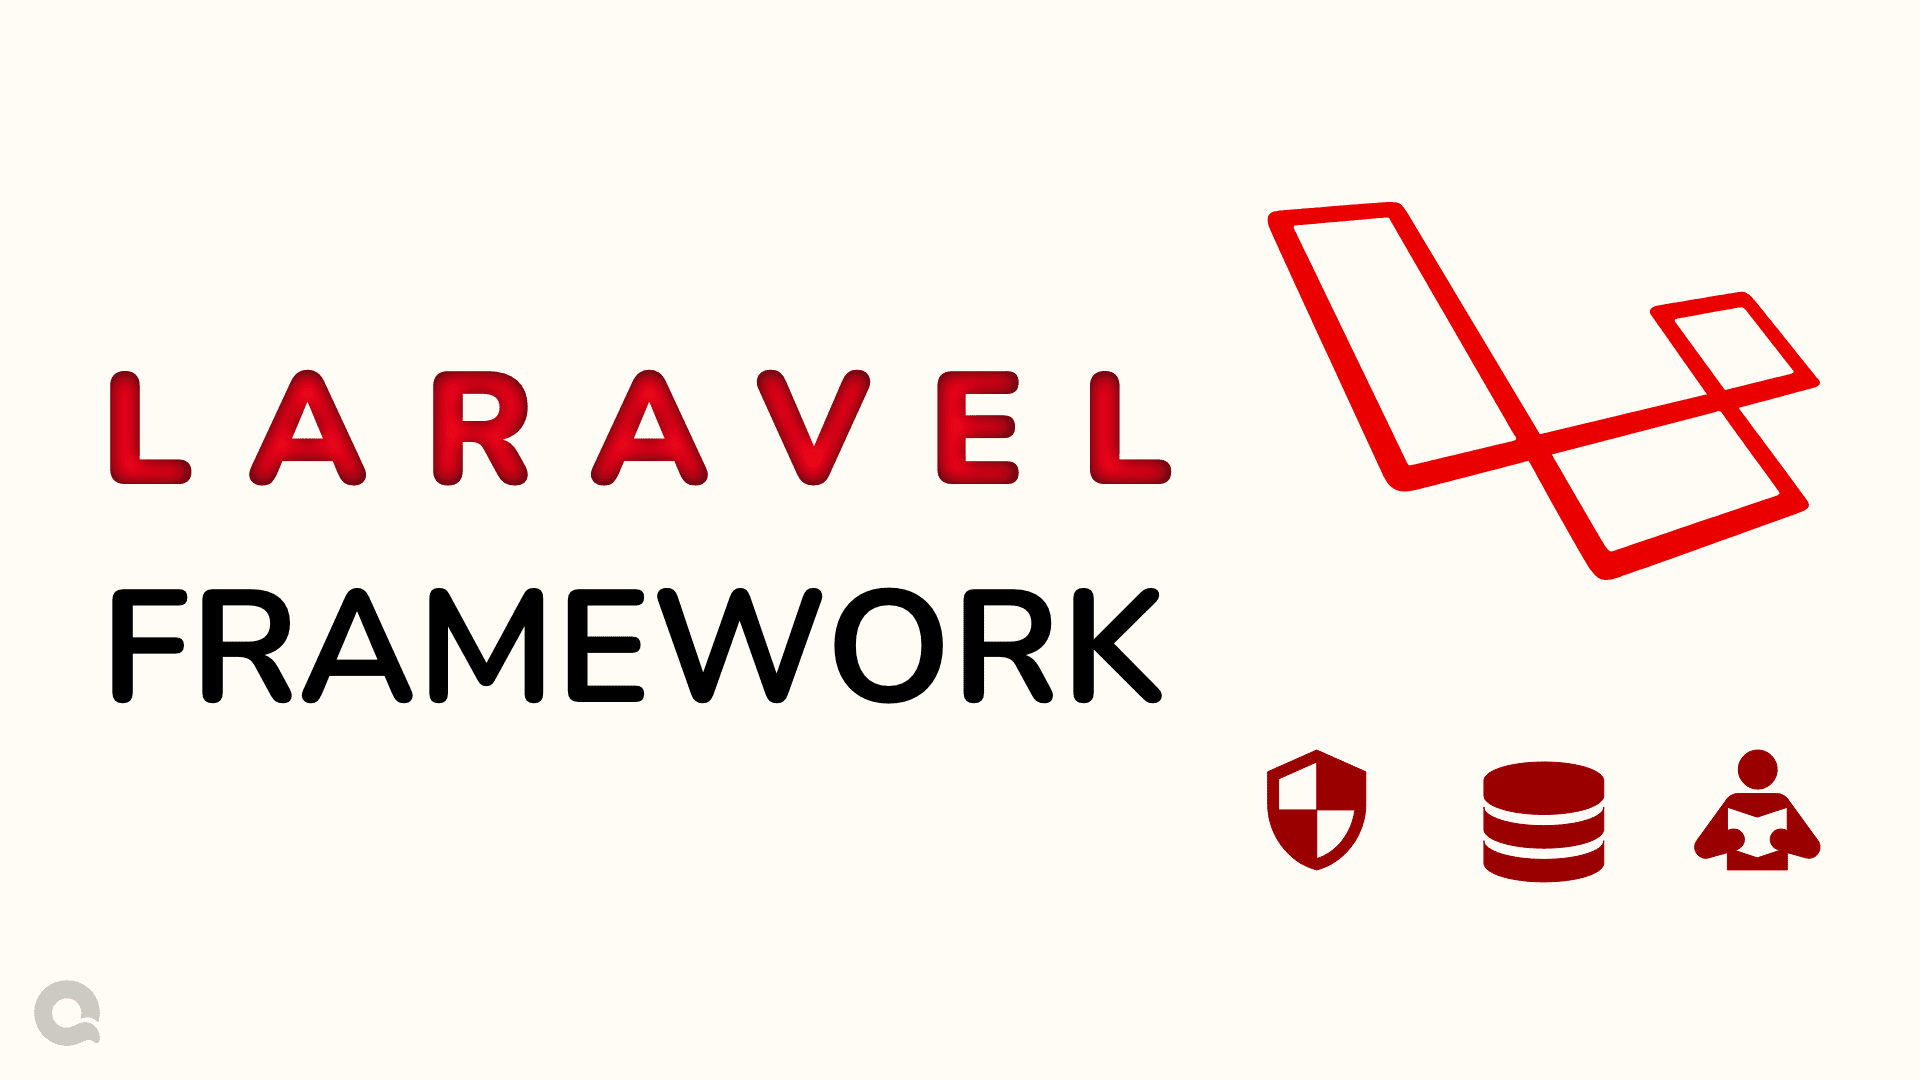 Why One Should Use Laravel Framework for Web Application